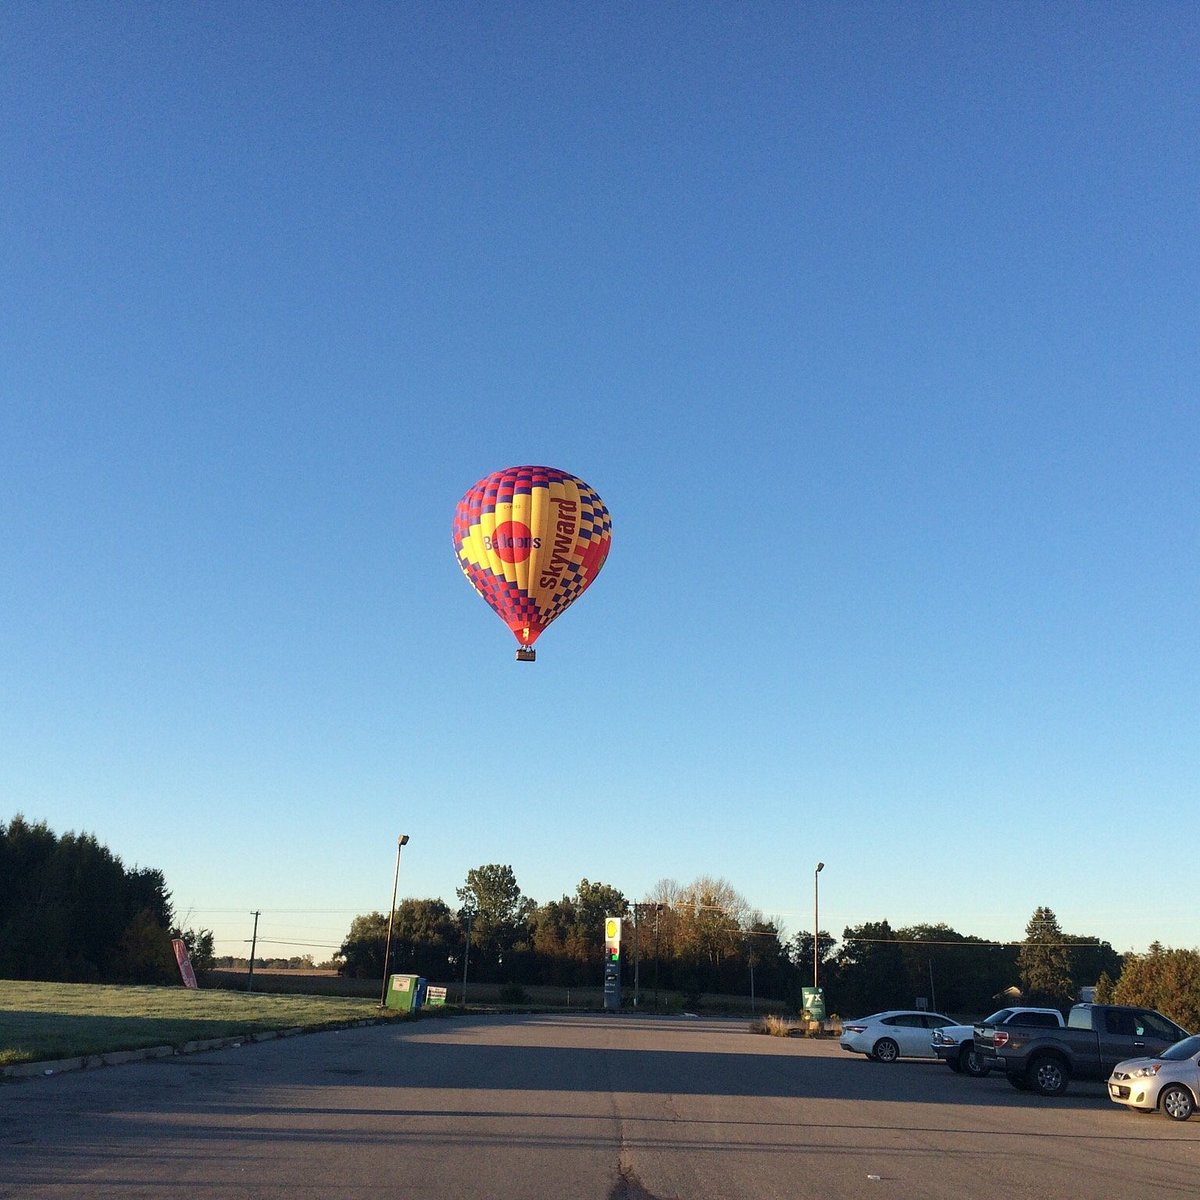 Skyward Balloons (Cambridge) All You Need to Know